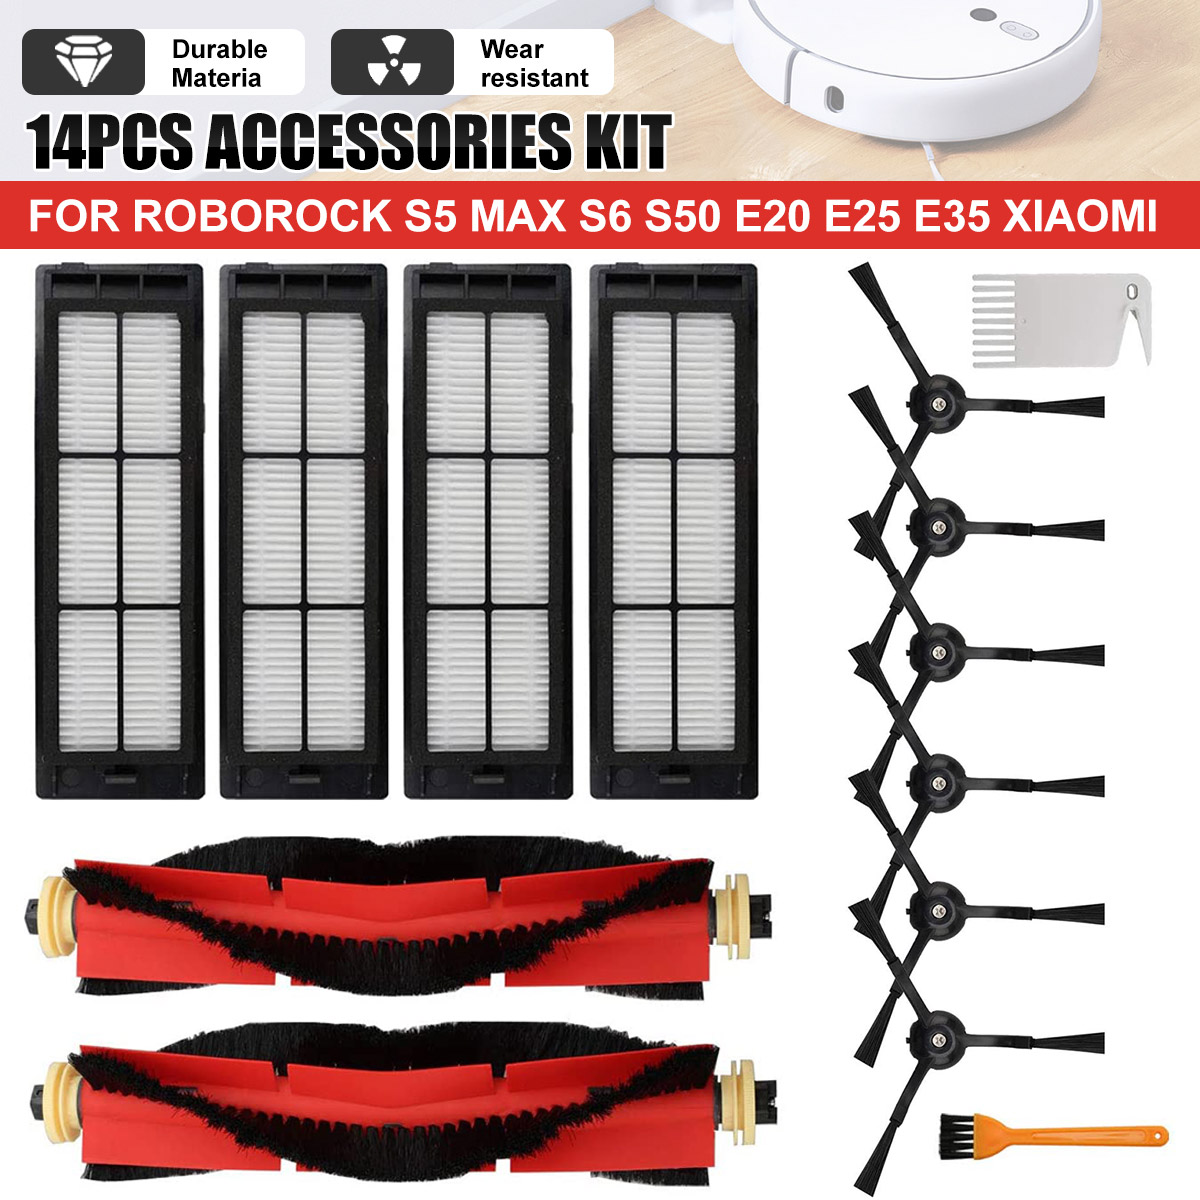 12pcs Replacements for Roborock S5 MAX S6 S50 E20 E25 E35 Xiaomi Mijia Vacuum Cleaner Parts Accessories Main Brush*2 Side Brush*6 Filter*4  [Not-original]